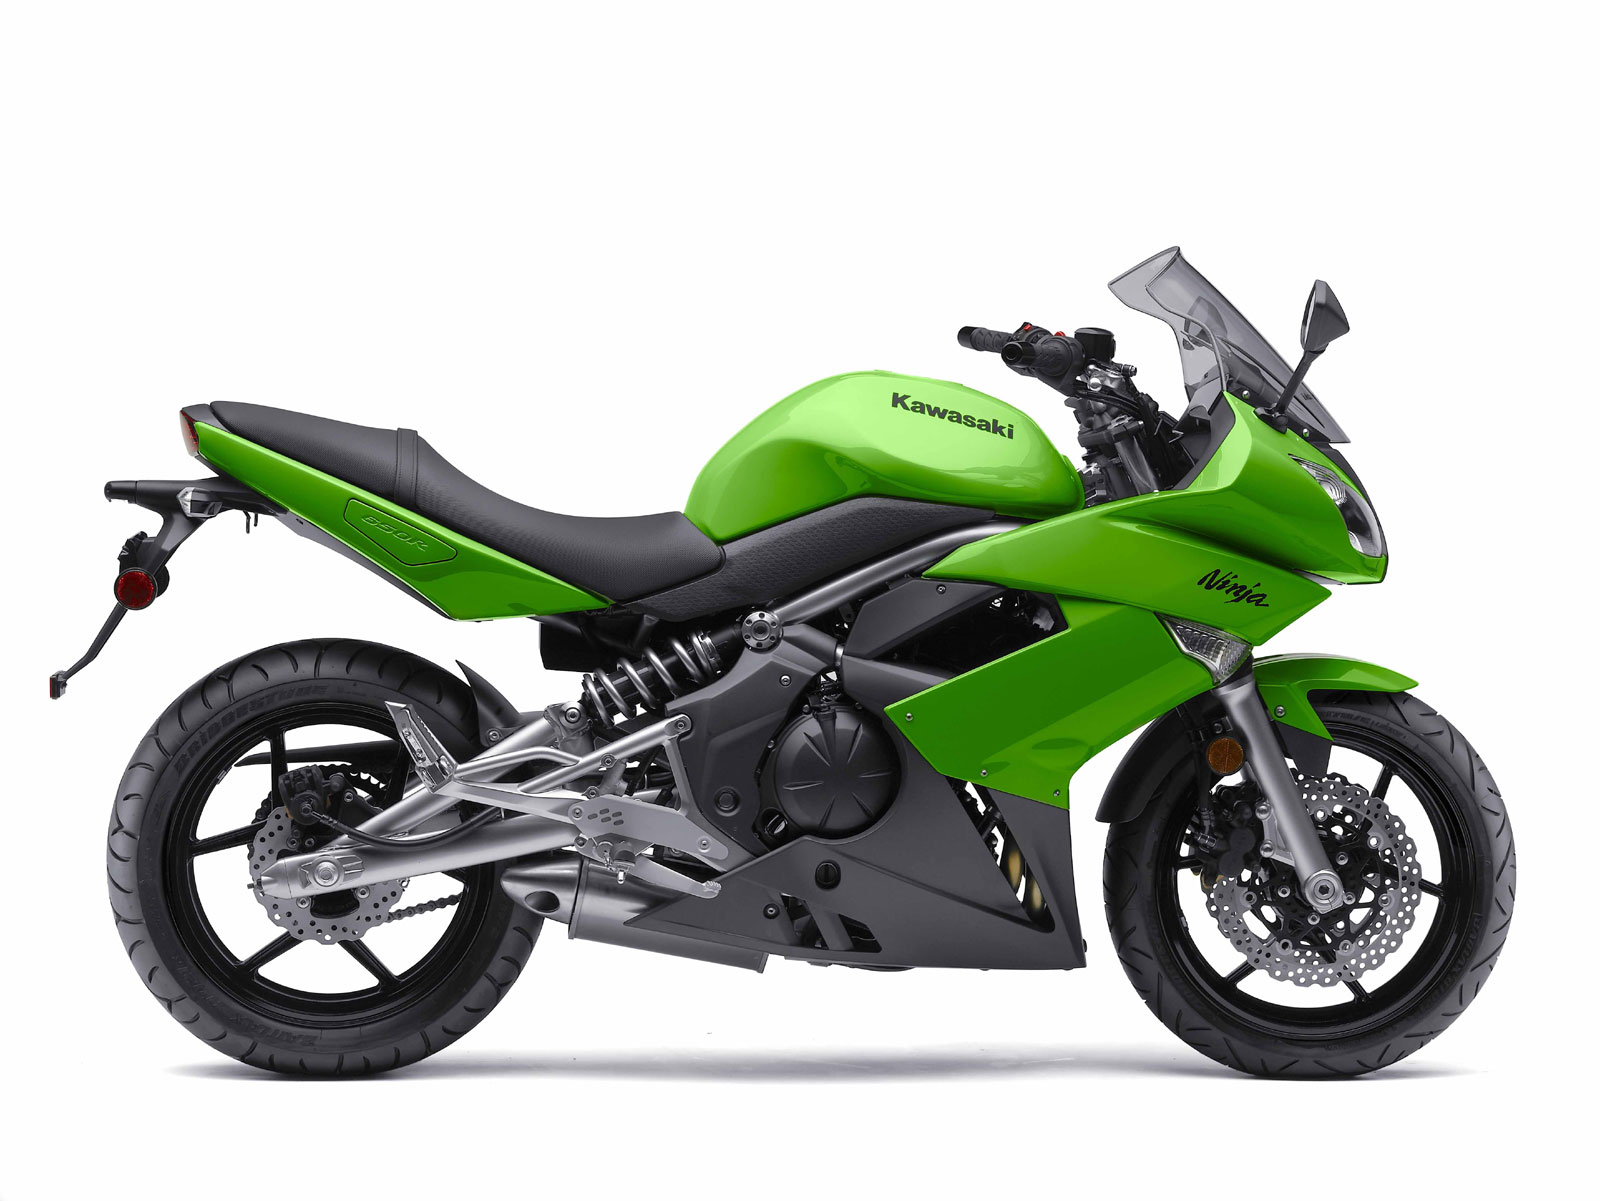 Bajaj Kawasaki Ninja 650r Features And Specifications | Automotive ...